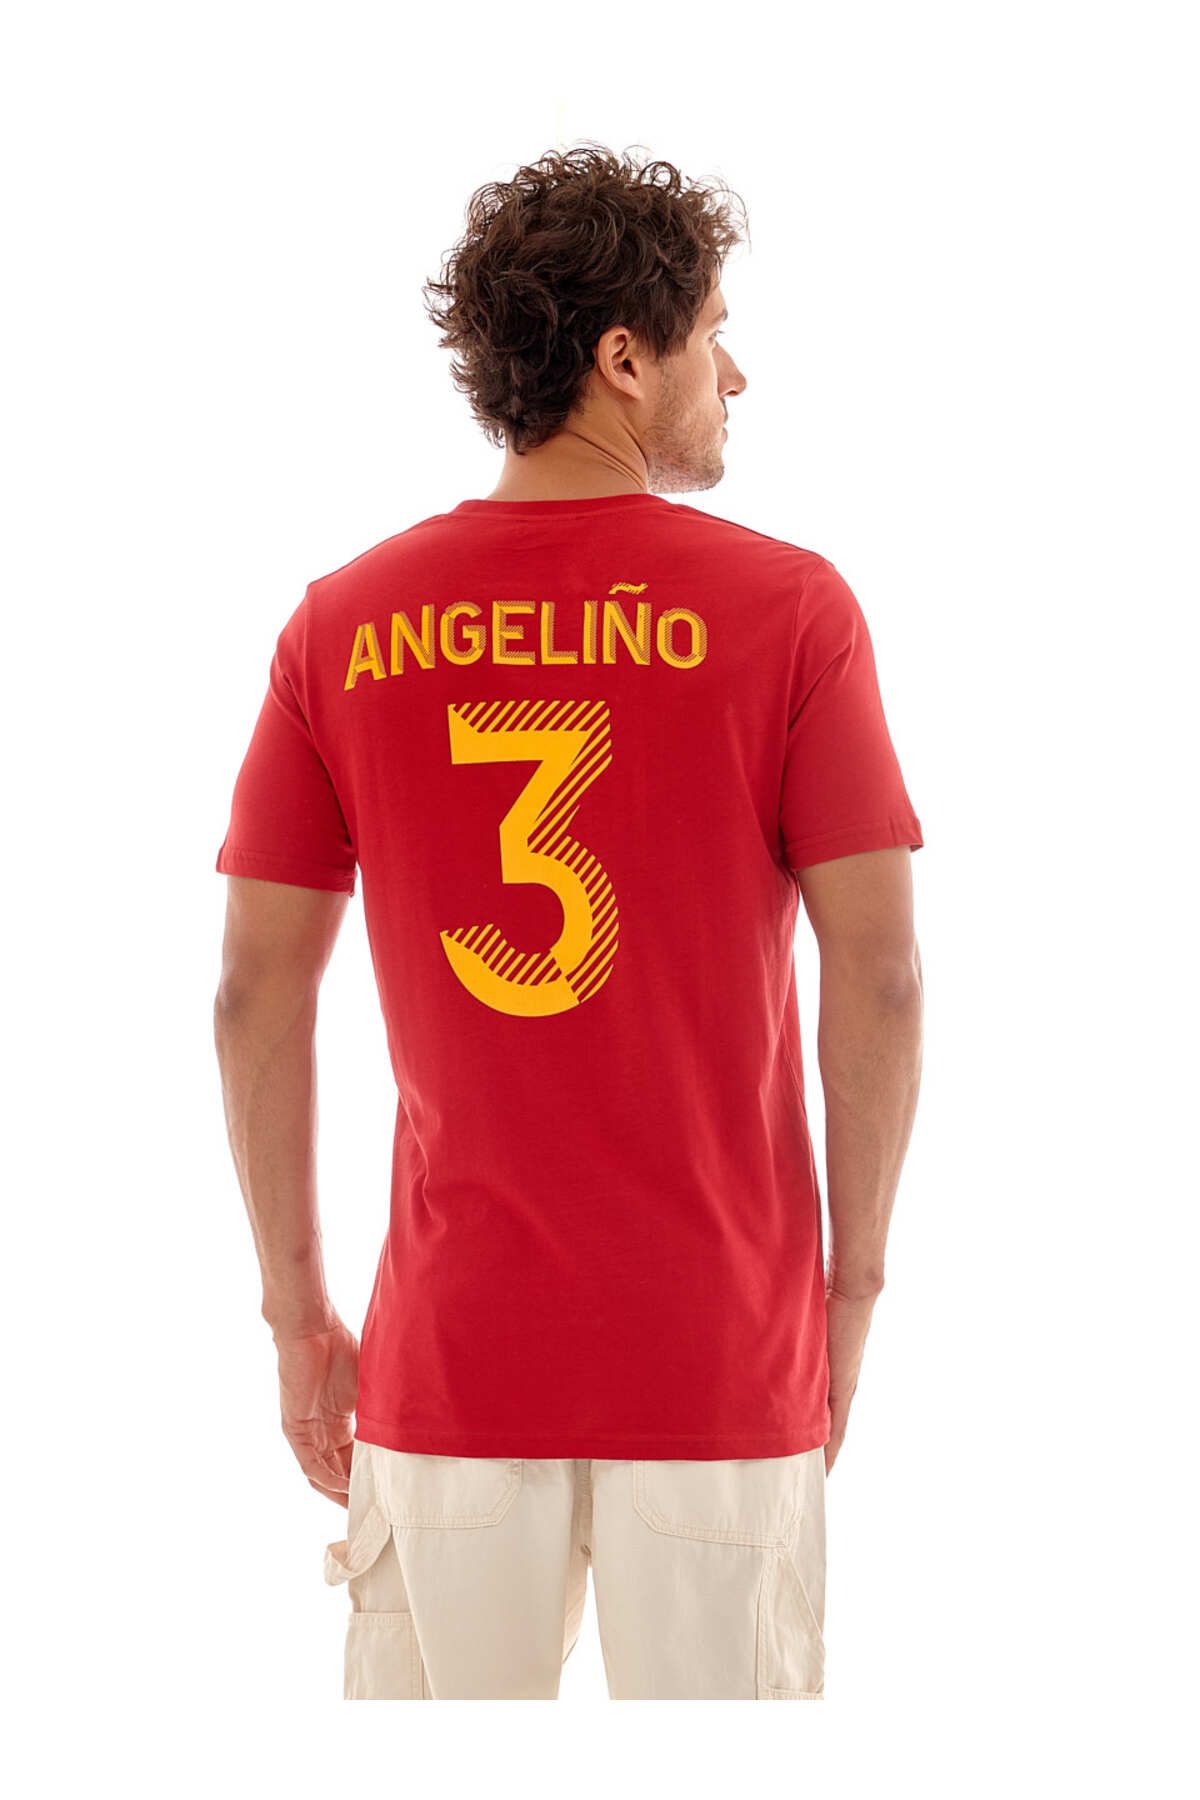 Galatasaray Galatasaray Angelino T-shirt E231363